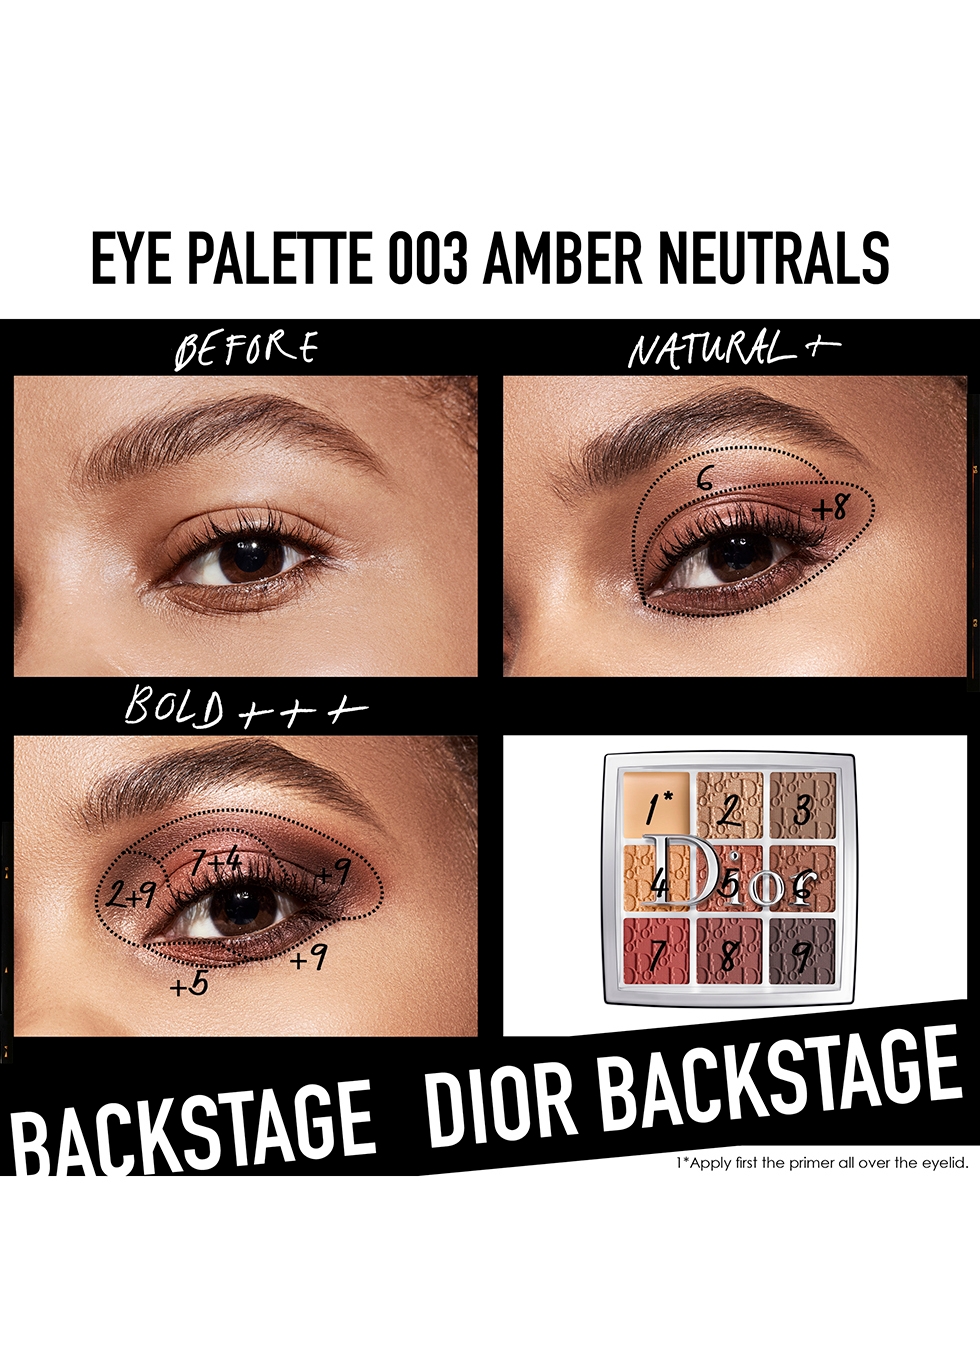 Dior Backstage Warm Neutrals Eye Palette Outlet 53 OFF  moovingcomuy